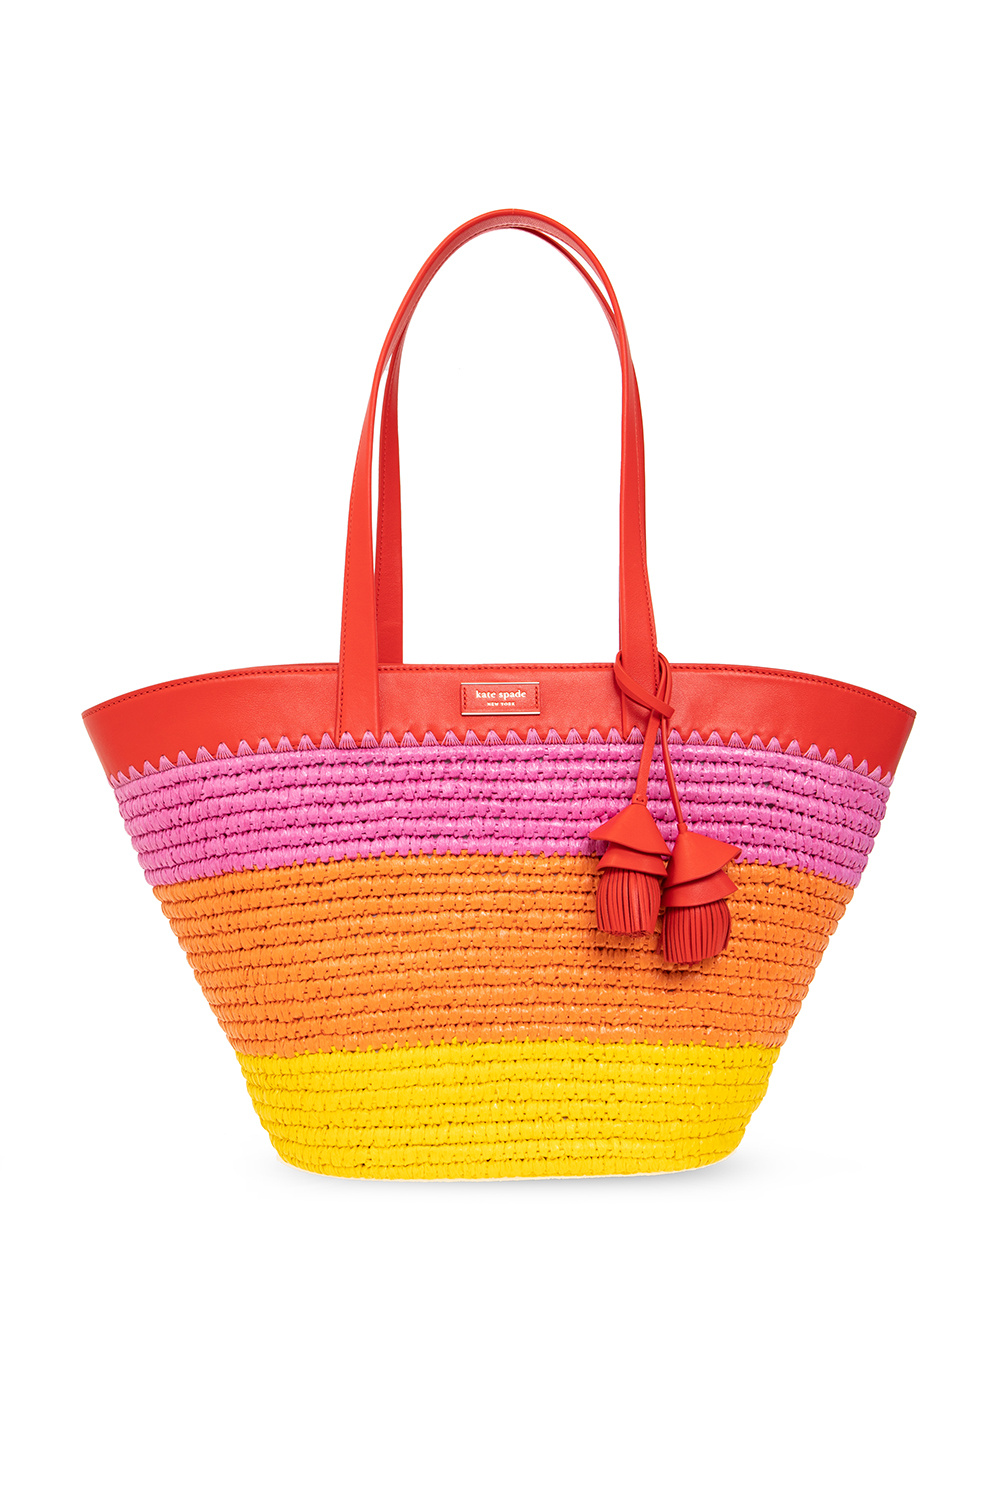 Kate Spade ‘Striped Medium’ shopper bag